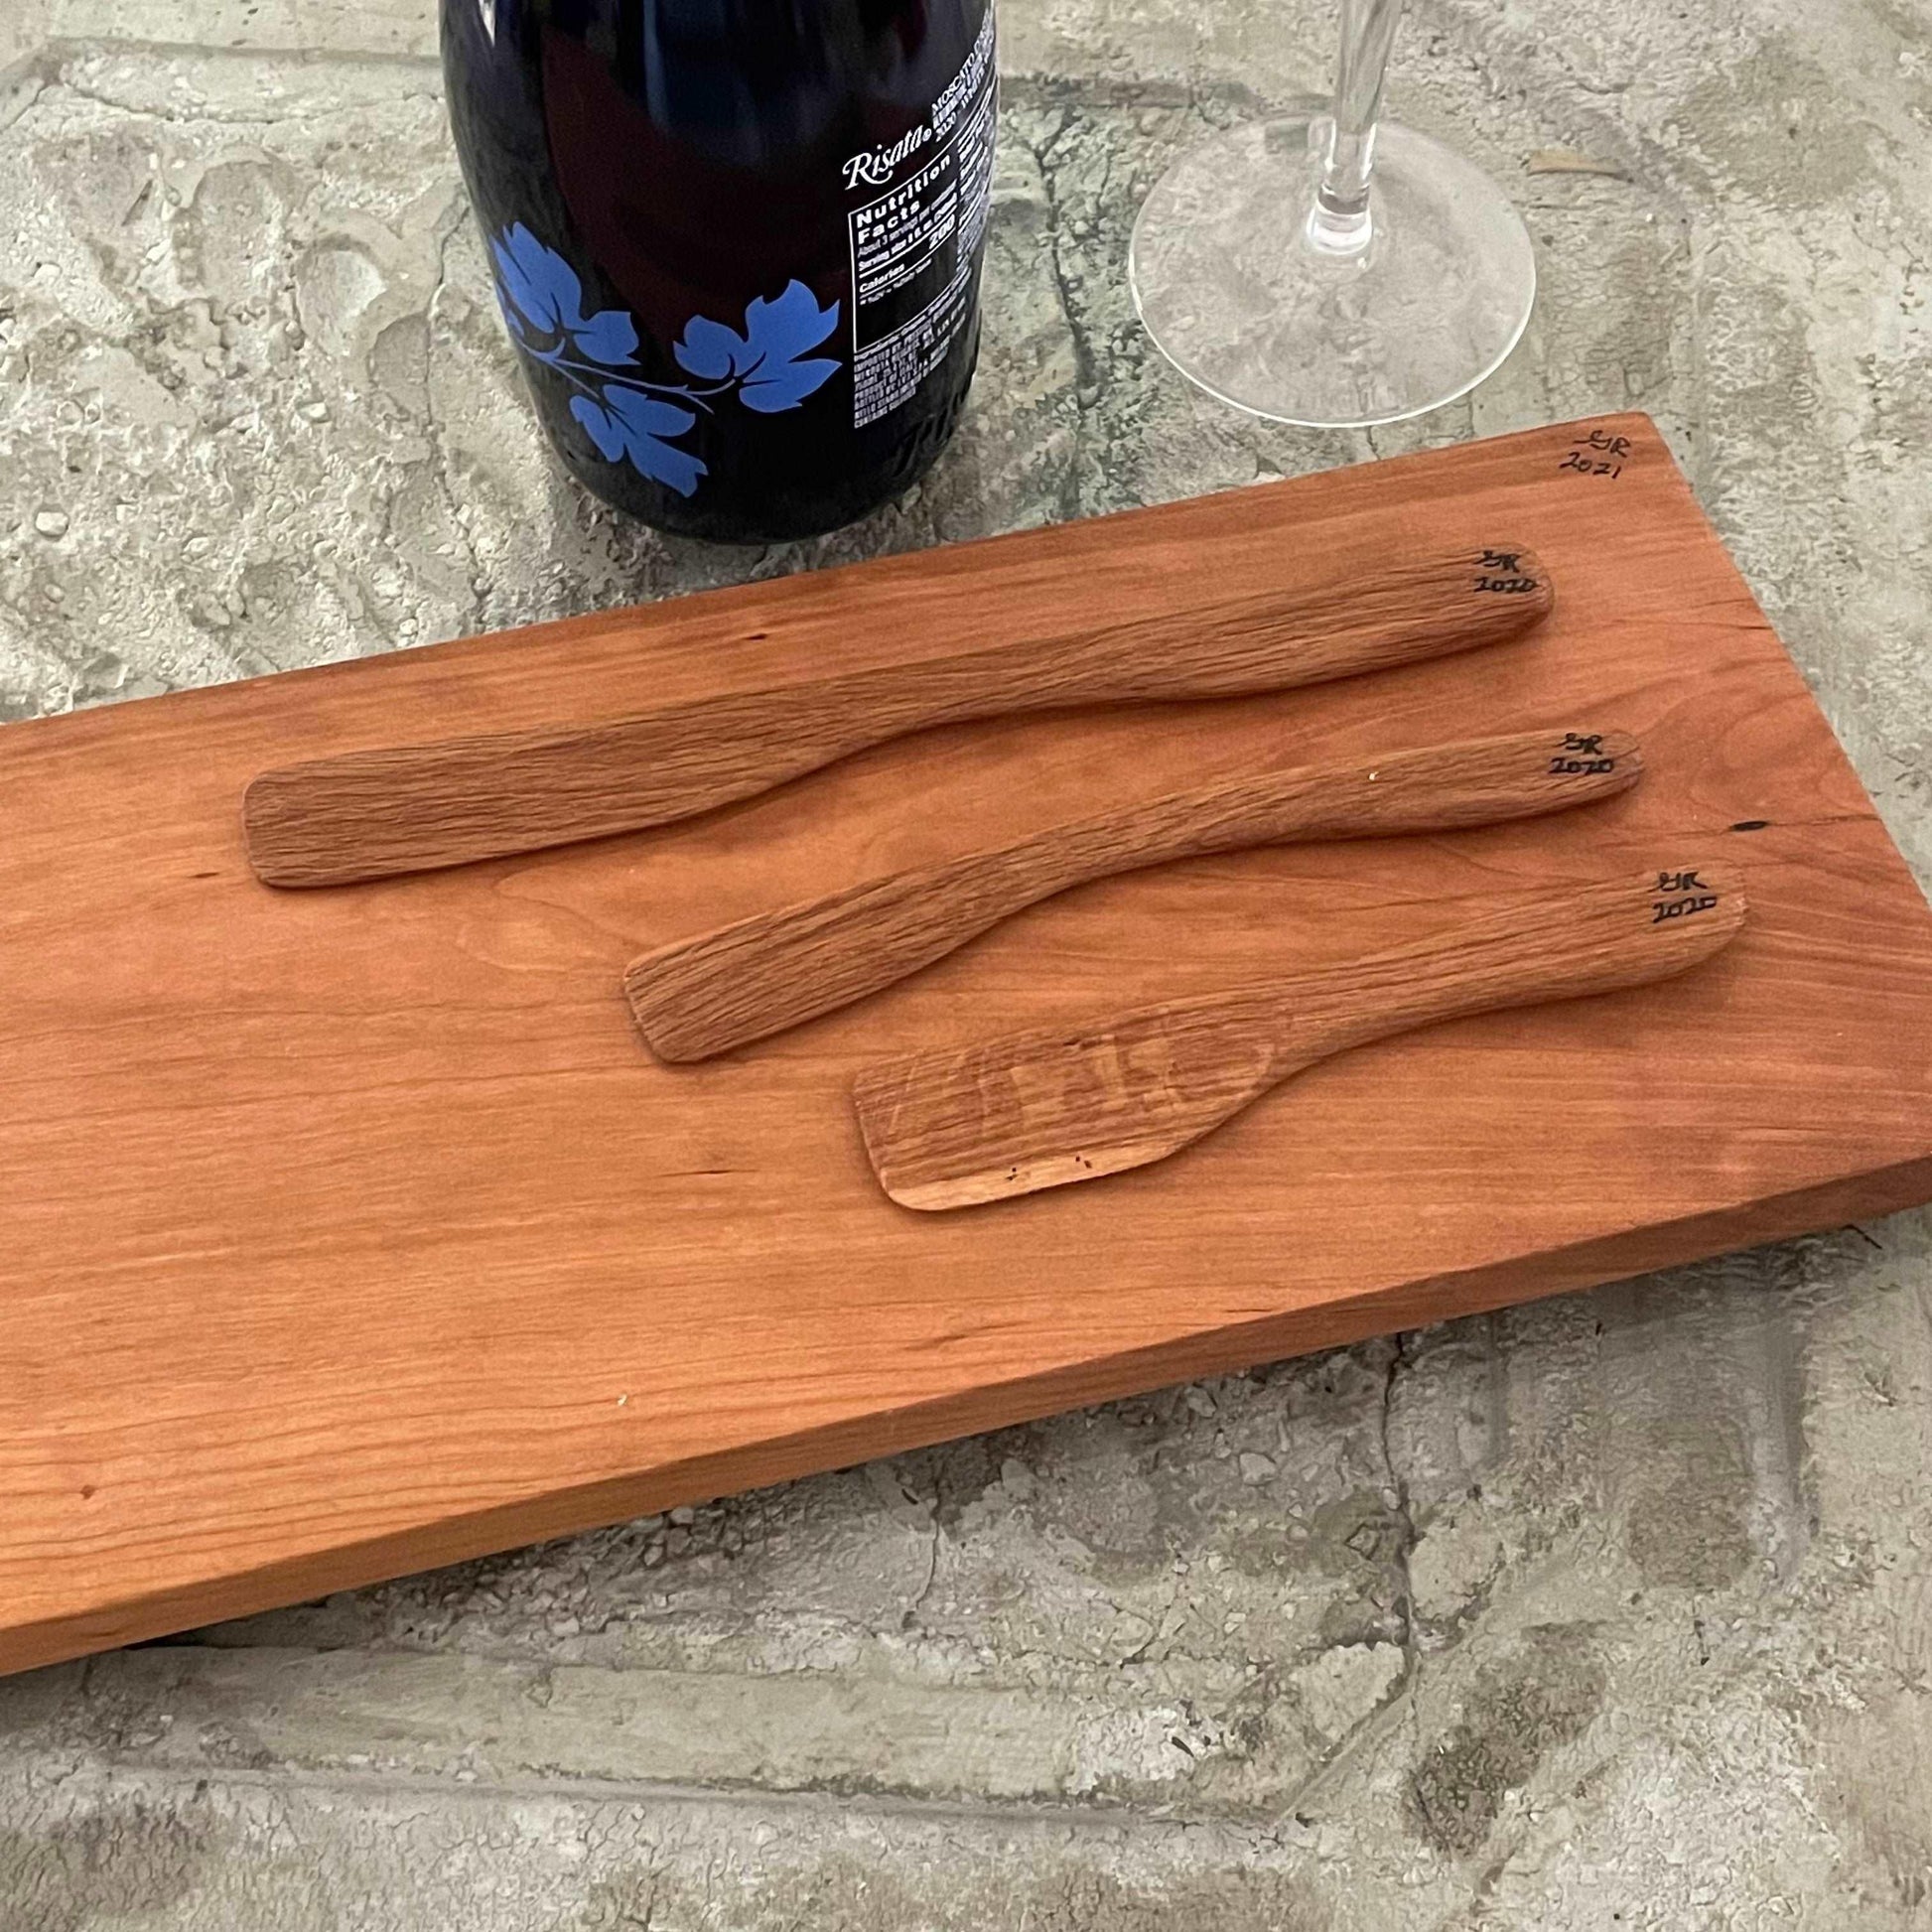 4 Piece Charcuterie Gift Set Handmade Live Edge White Oak Wood Long Snacking Board & 3 Utensils